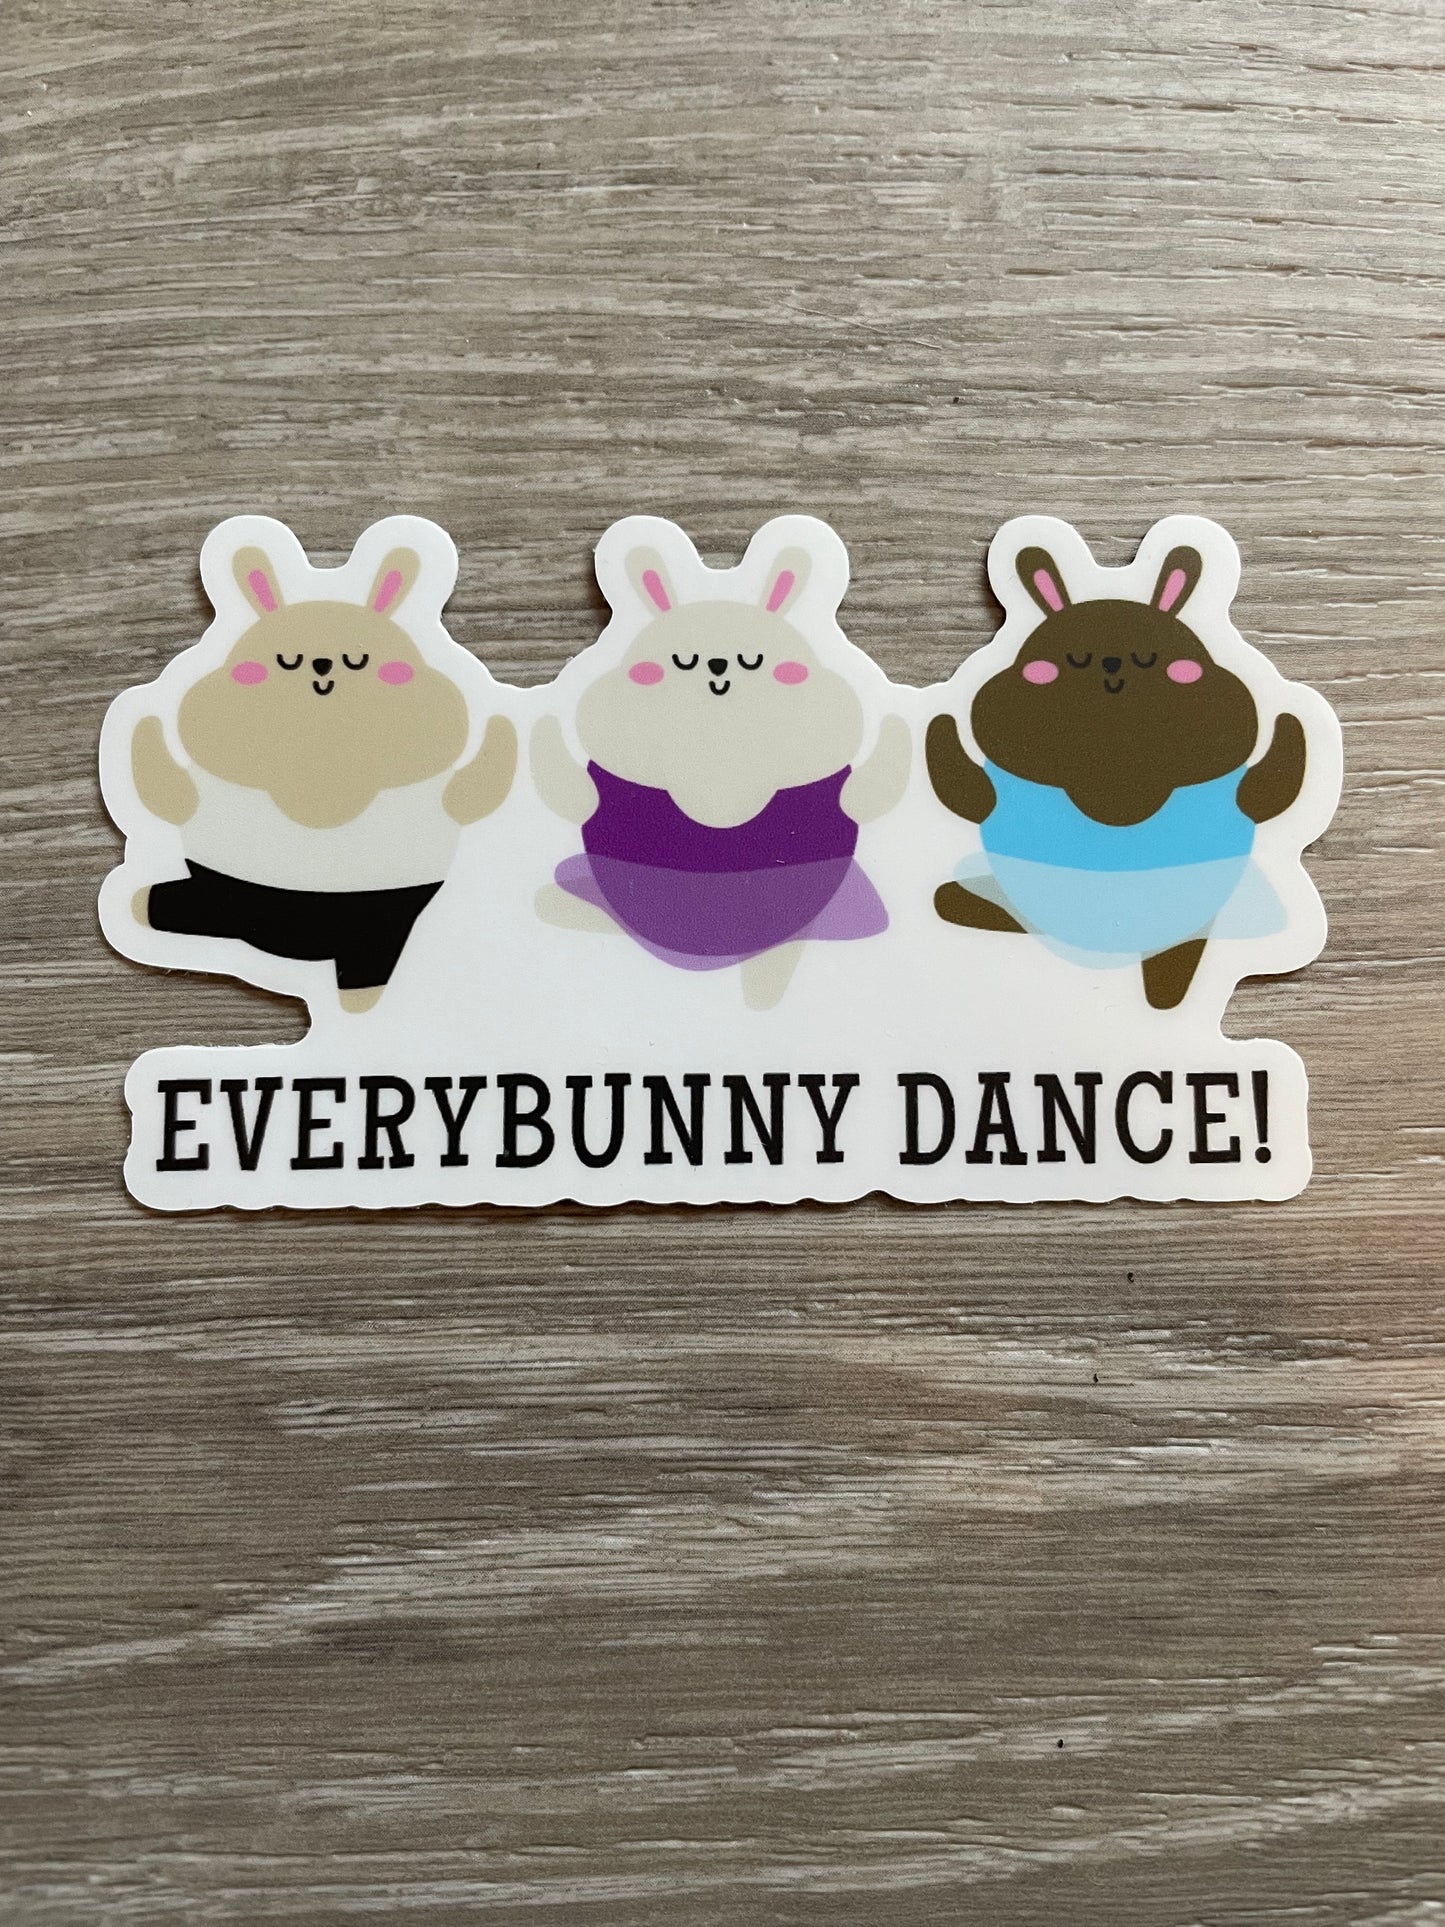 Everybunny Dance Vinyl Sticker, 4" x 2.2"